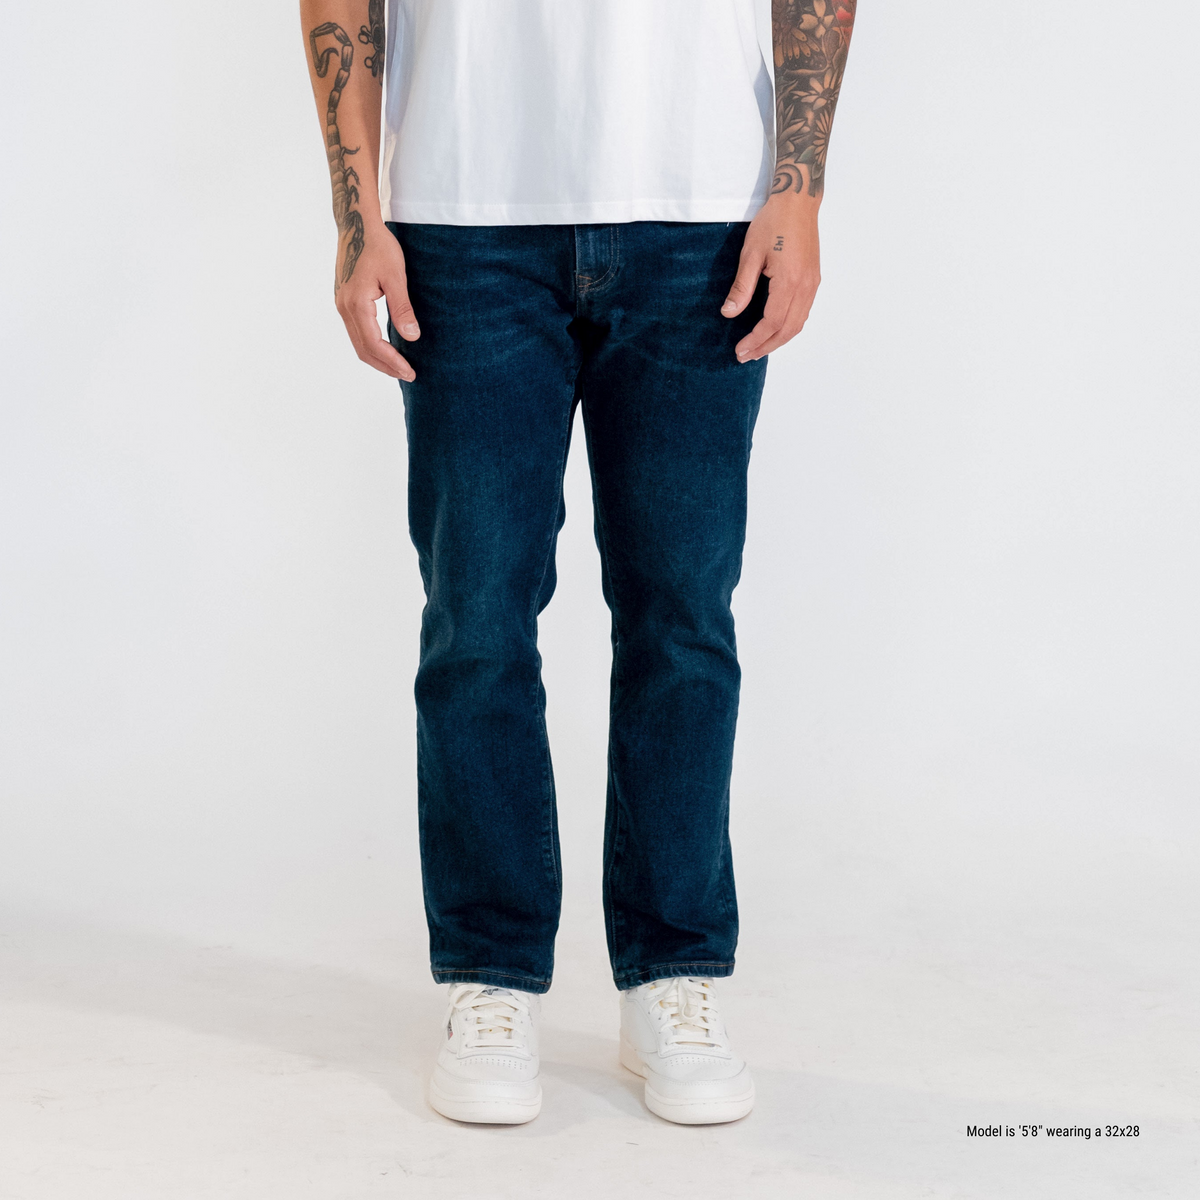 Fit Abbreviated – Apparel Slim Shorter for Men Jeans